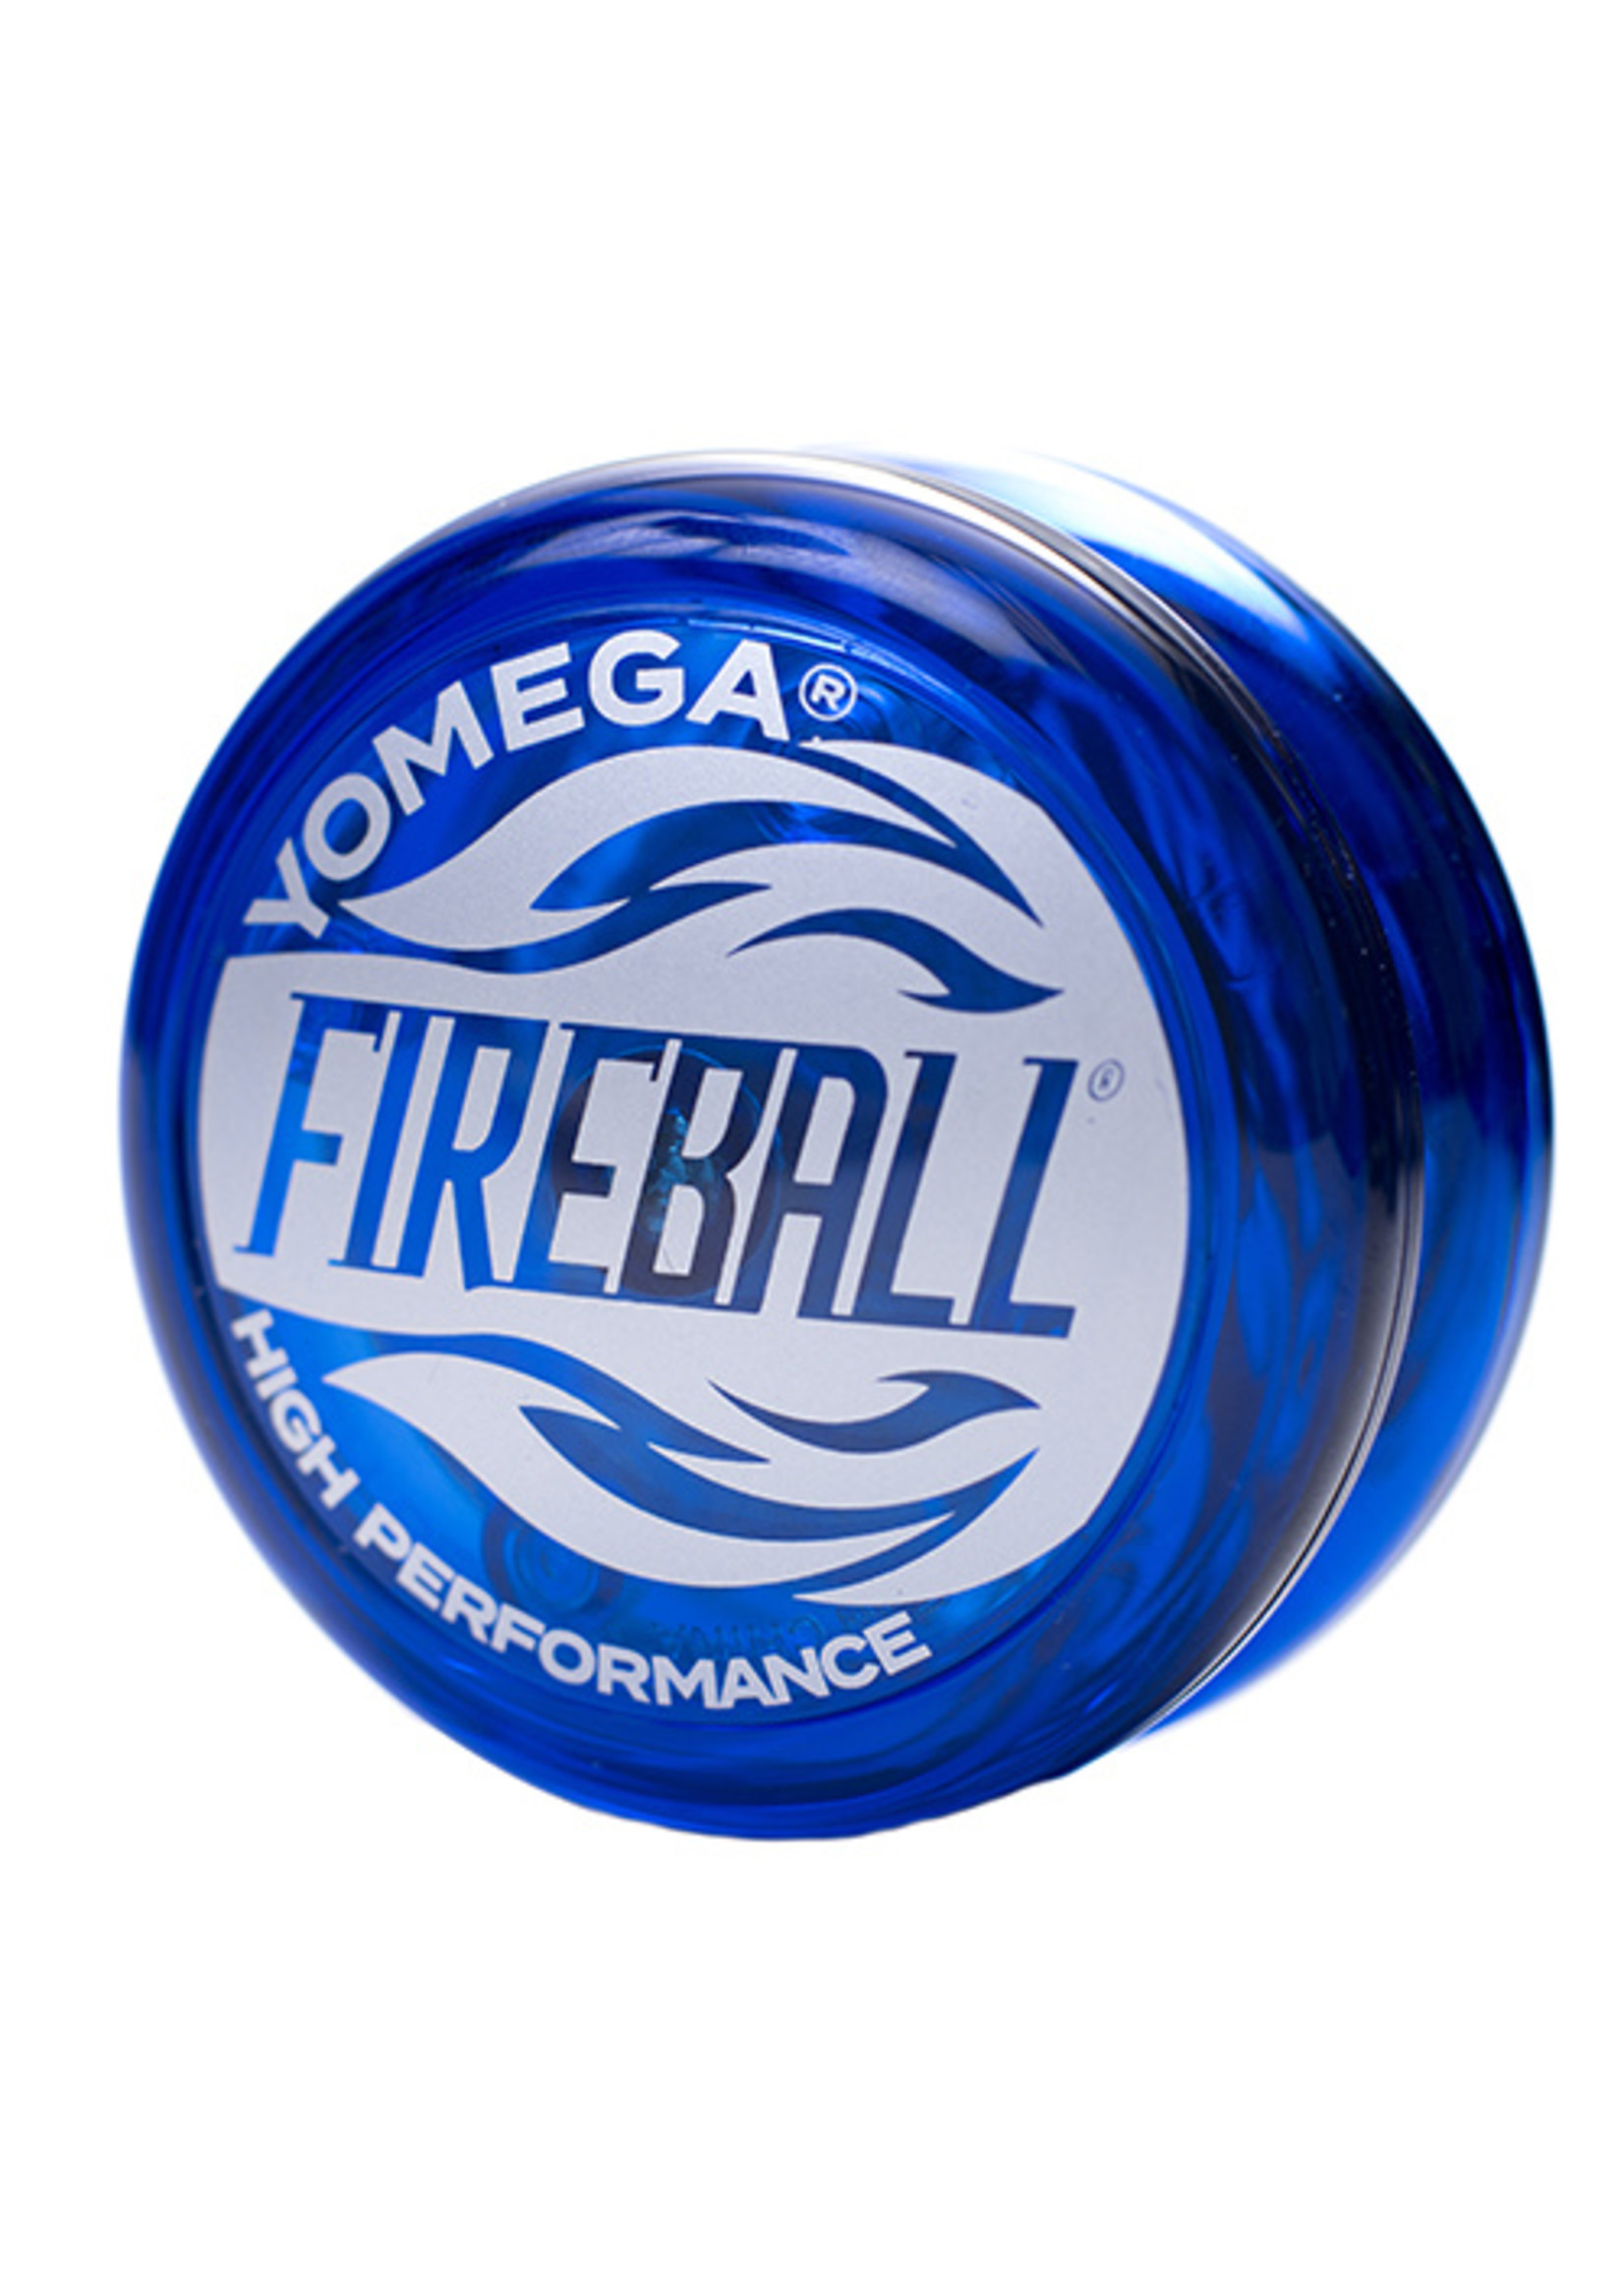 Yomega Fireball - Assorted Colors